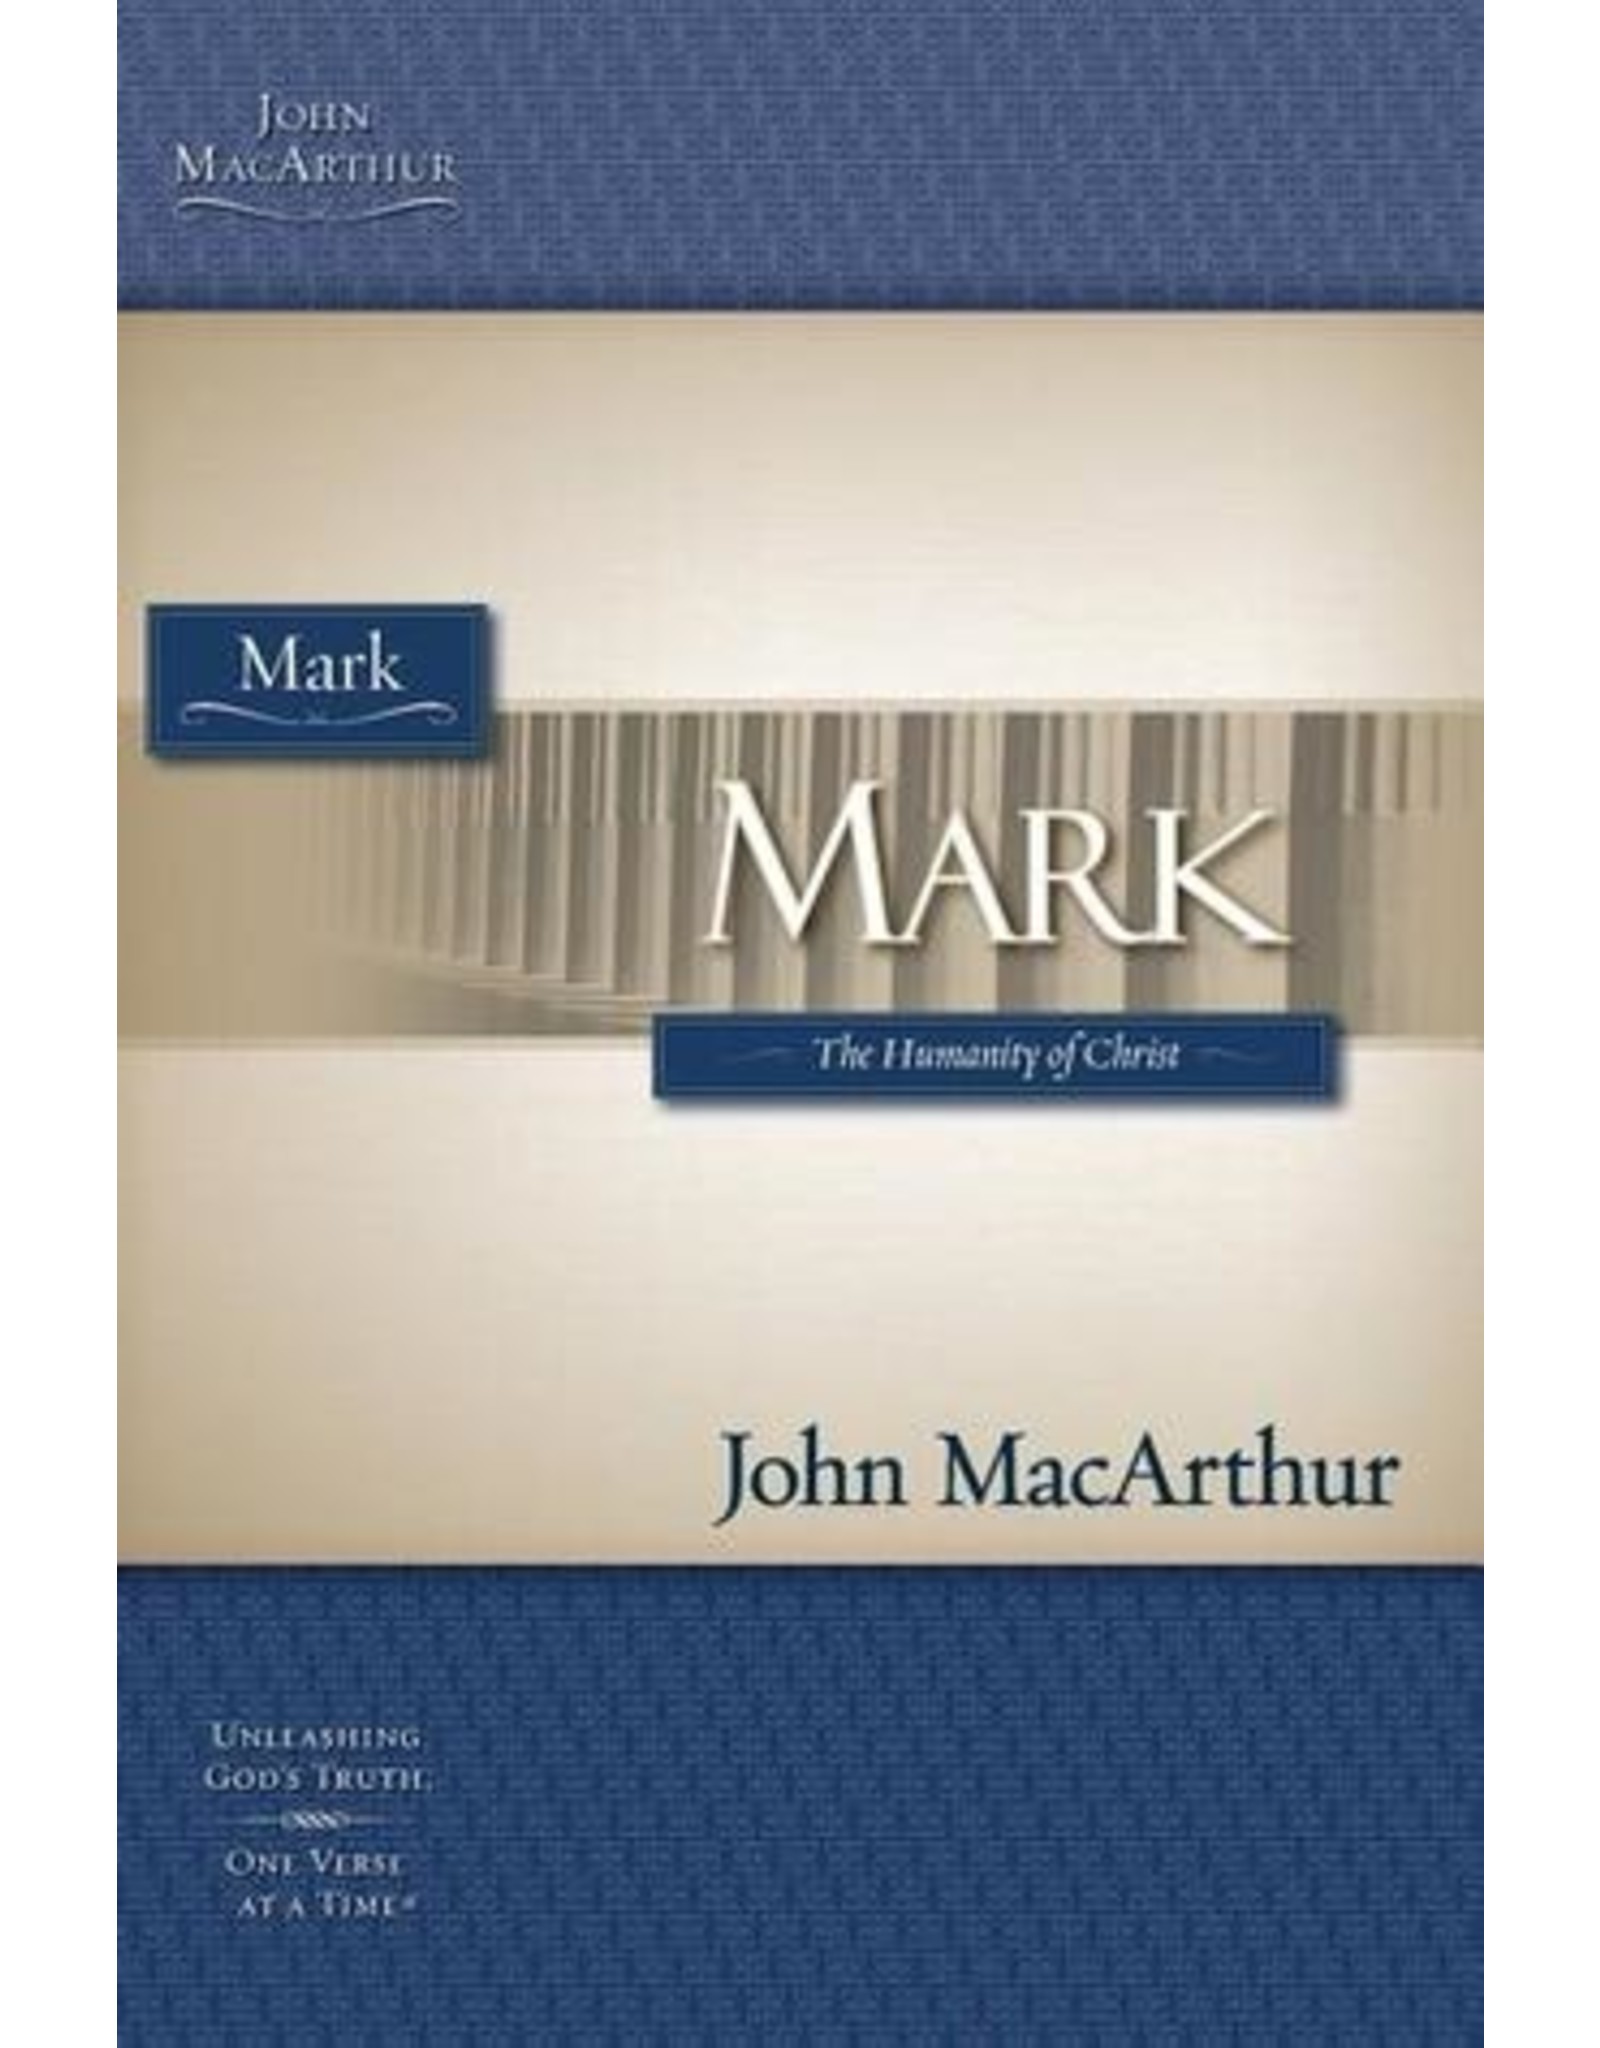 MacArthur Mark: The Humanity of Christ (MacArthur Bible Studies)